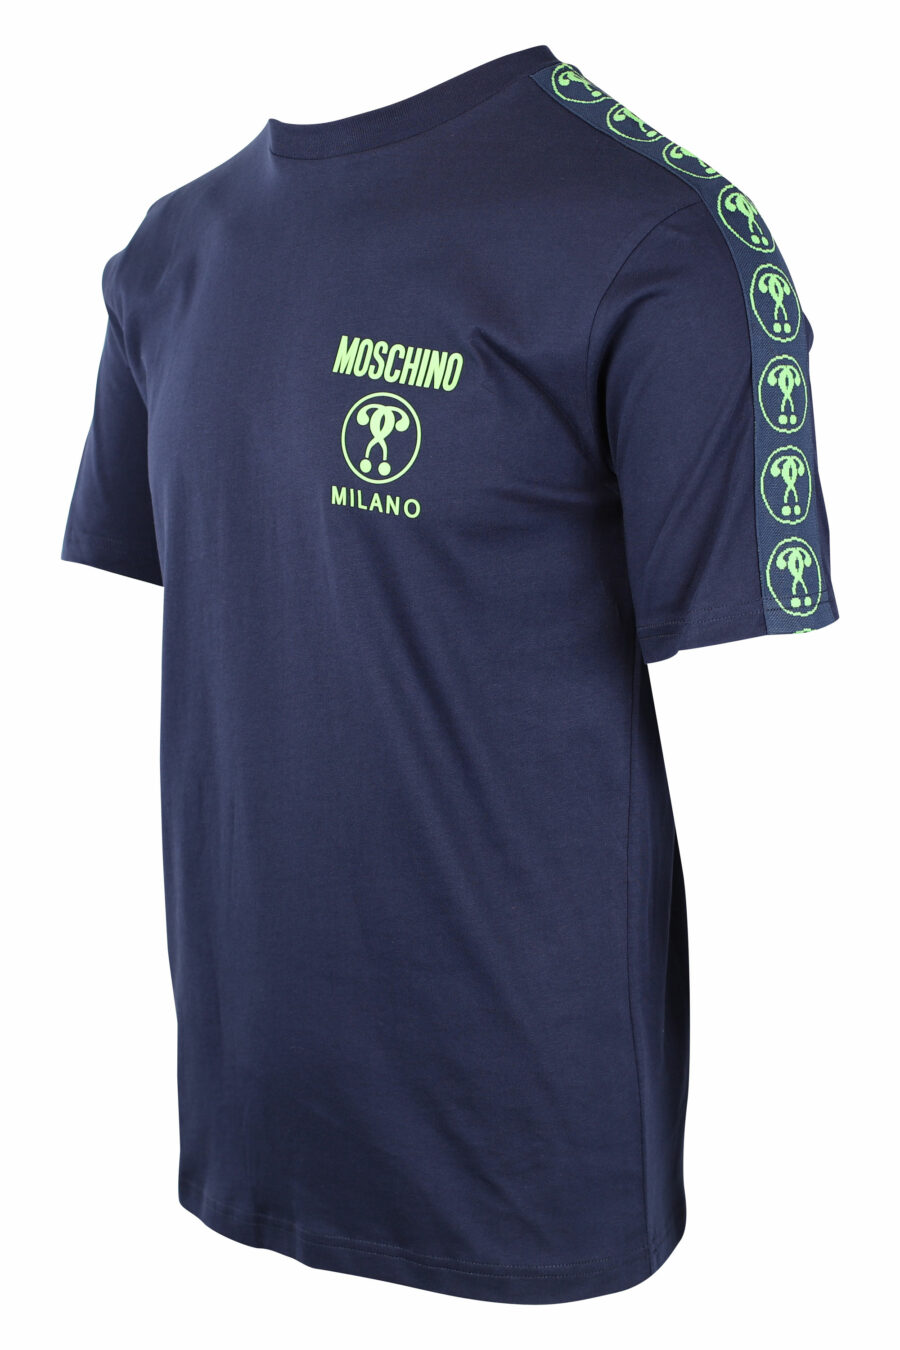 T-shirt bleu foncé avec double question mini-logo en vert - IMG 1447